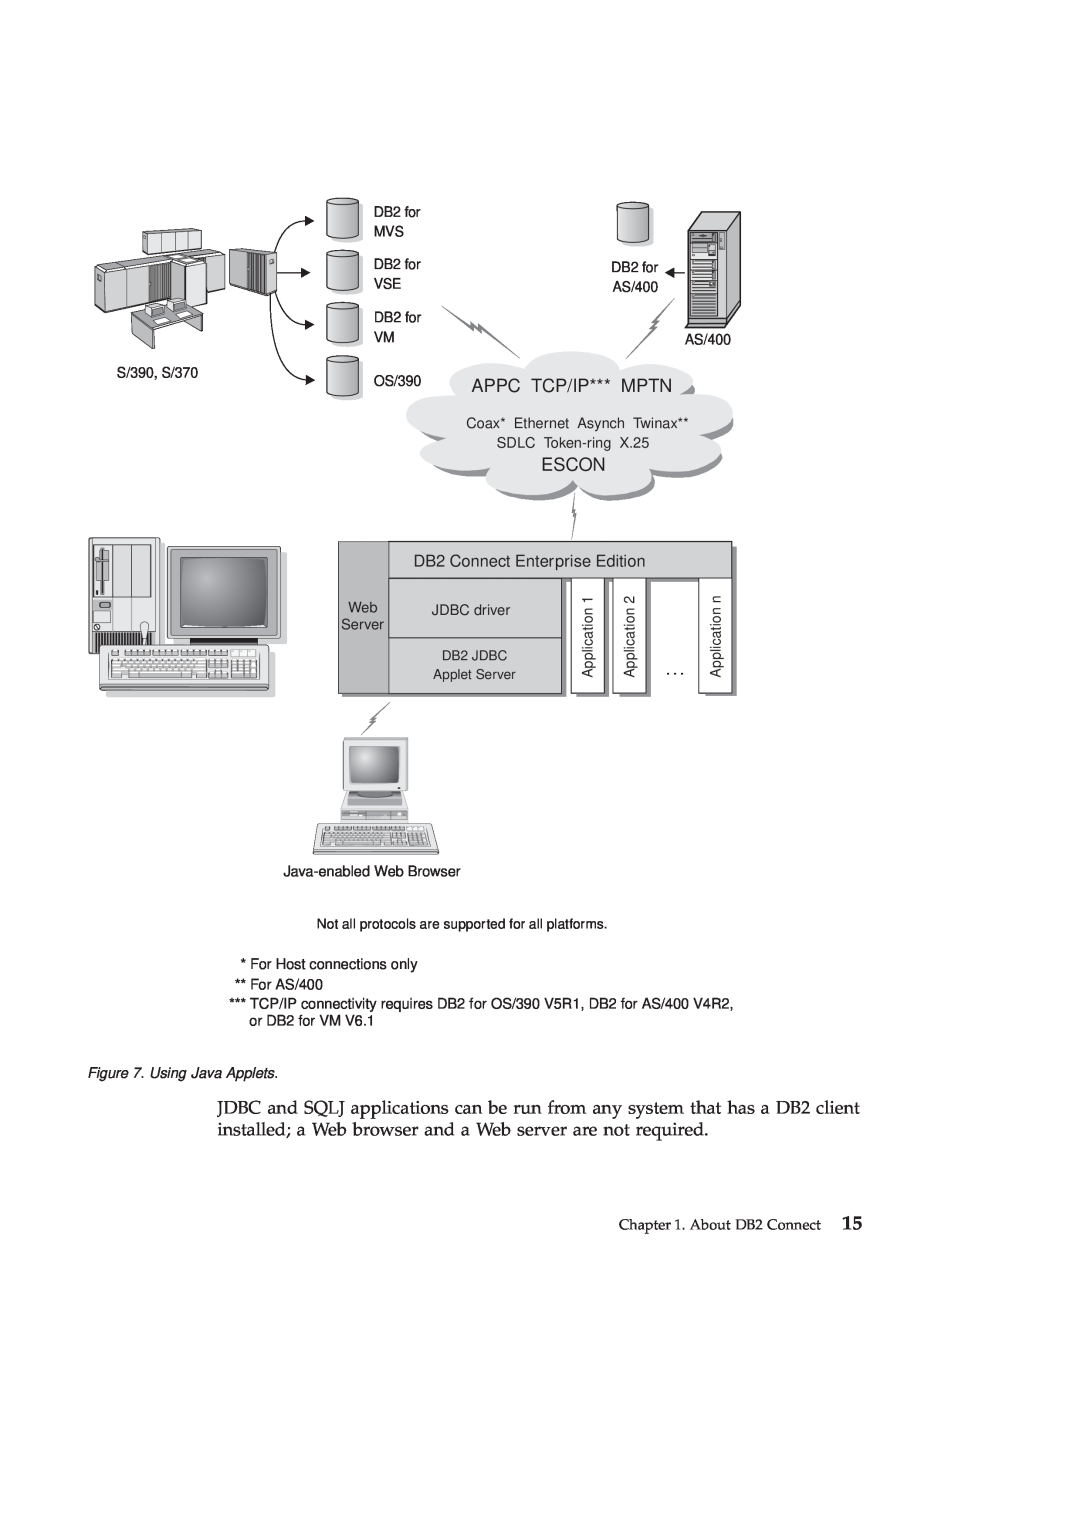 IBM GC09-2830-00 manual OS/390 APPC TCP/IP*** MPTN, Escon, Using Java Applets 